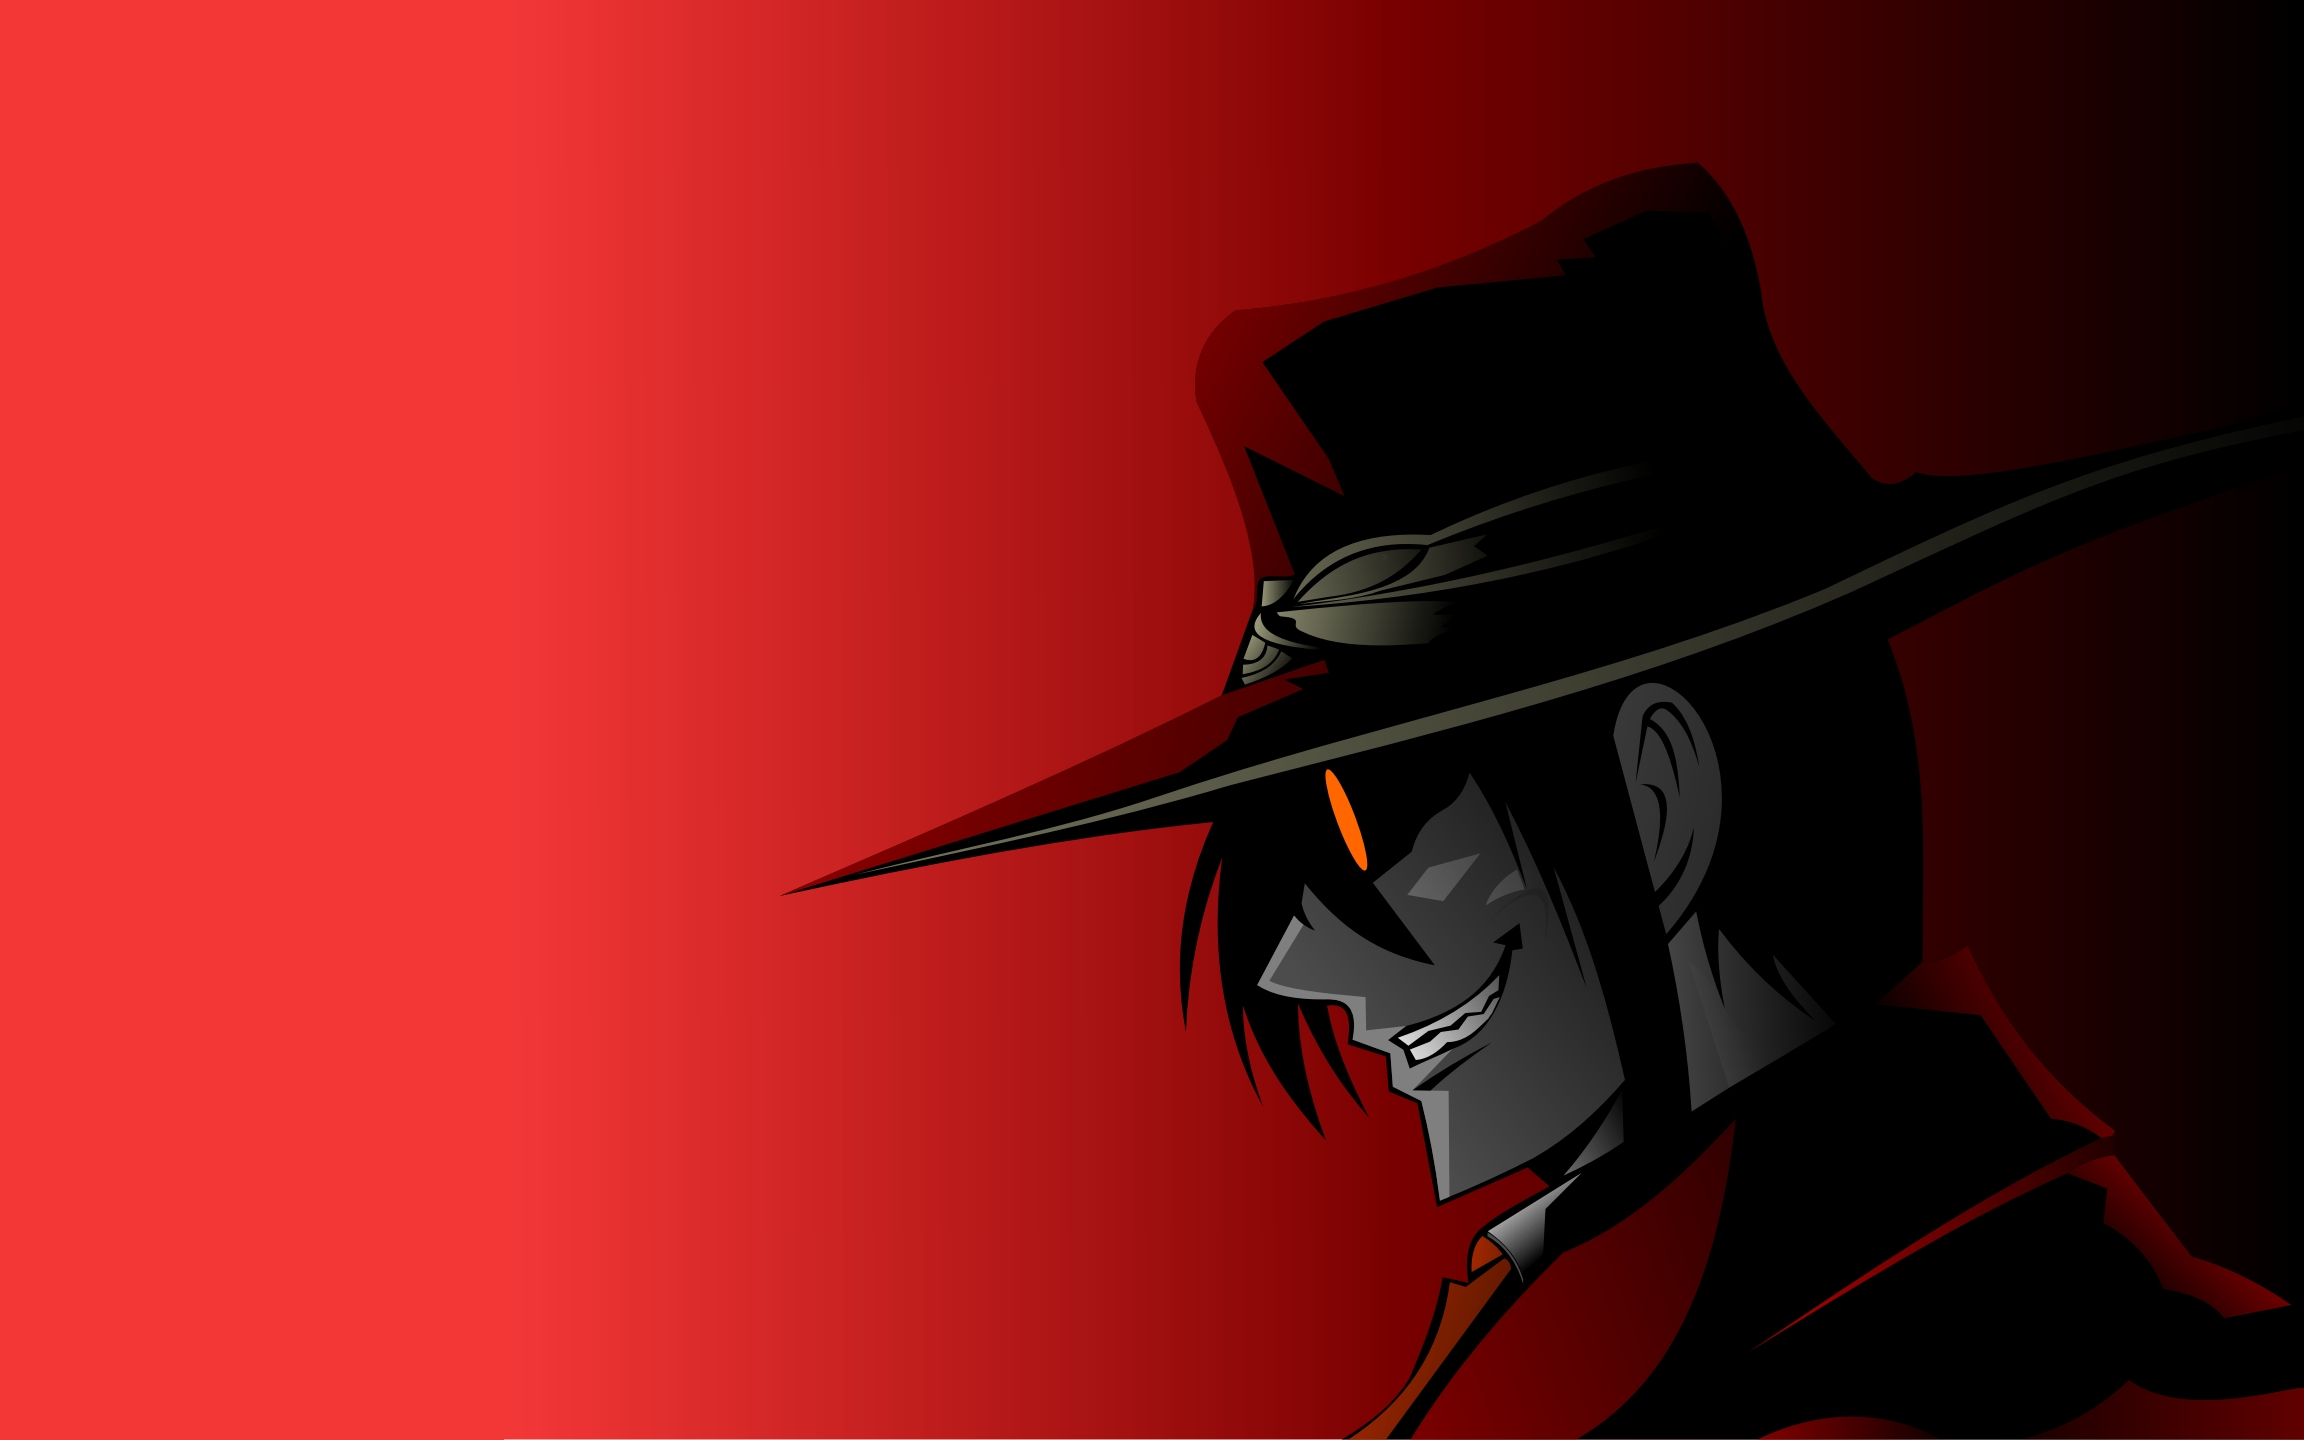 Anime 2304x1440 Hellsing Alucard red background red anime anime men gradient hat face profile smiling